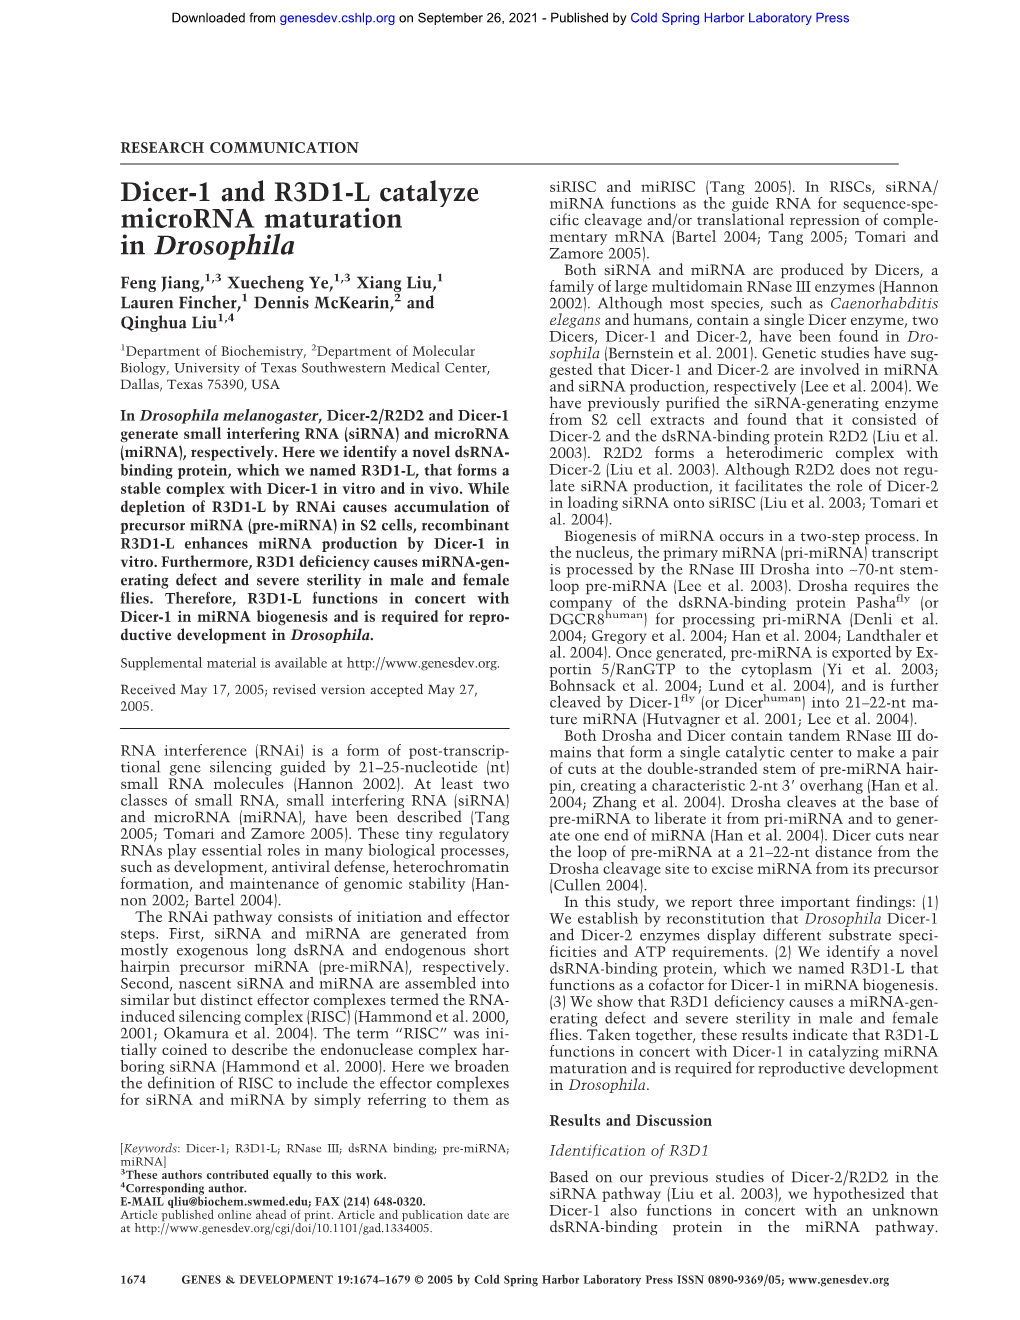 Dicer-1 and R3D1-L Catalyze Microrna Maturation in Drosophila